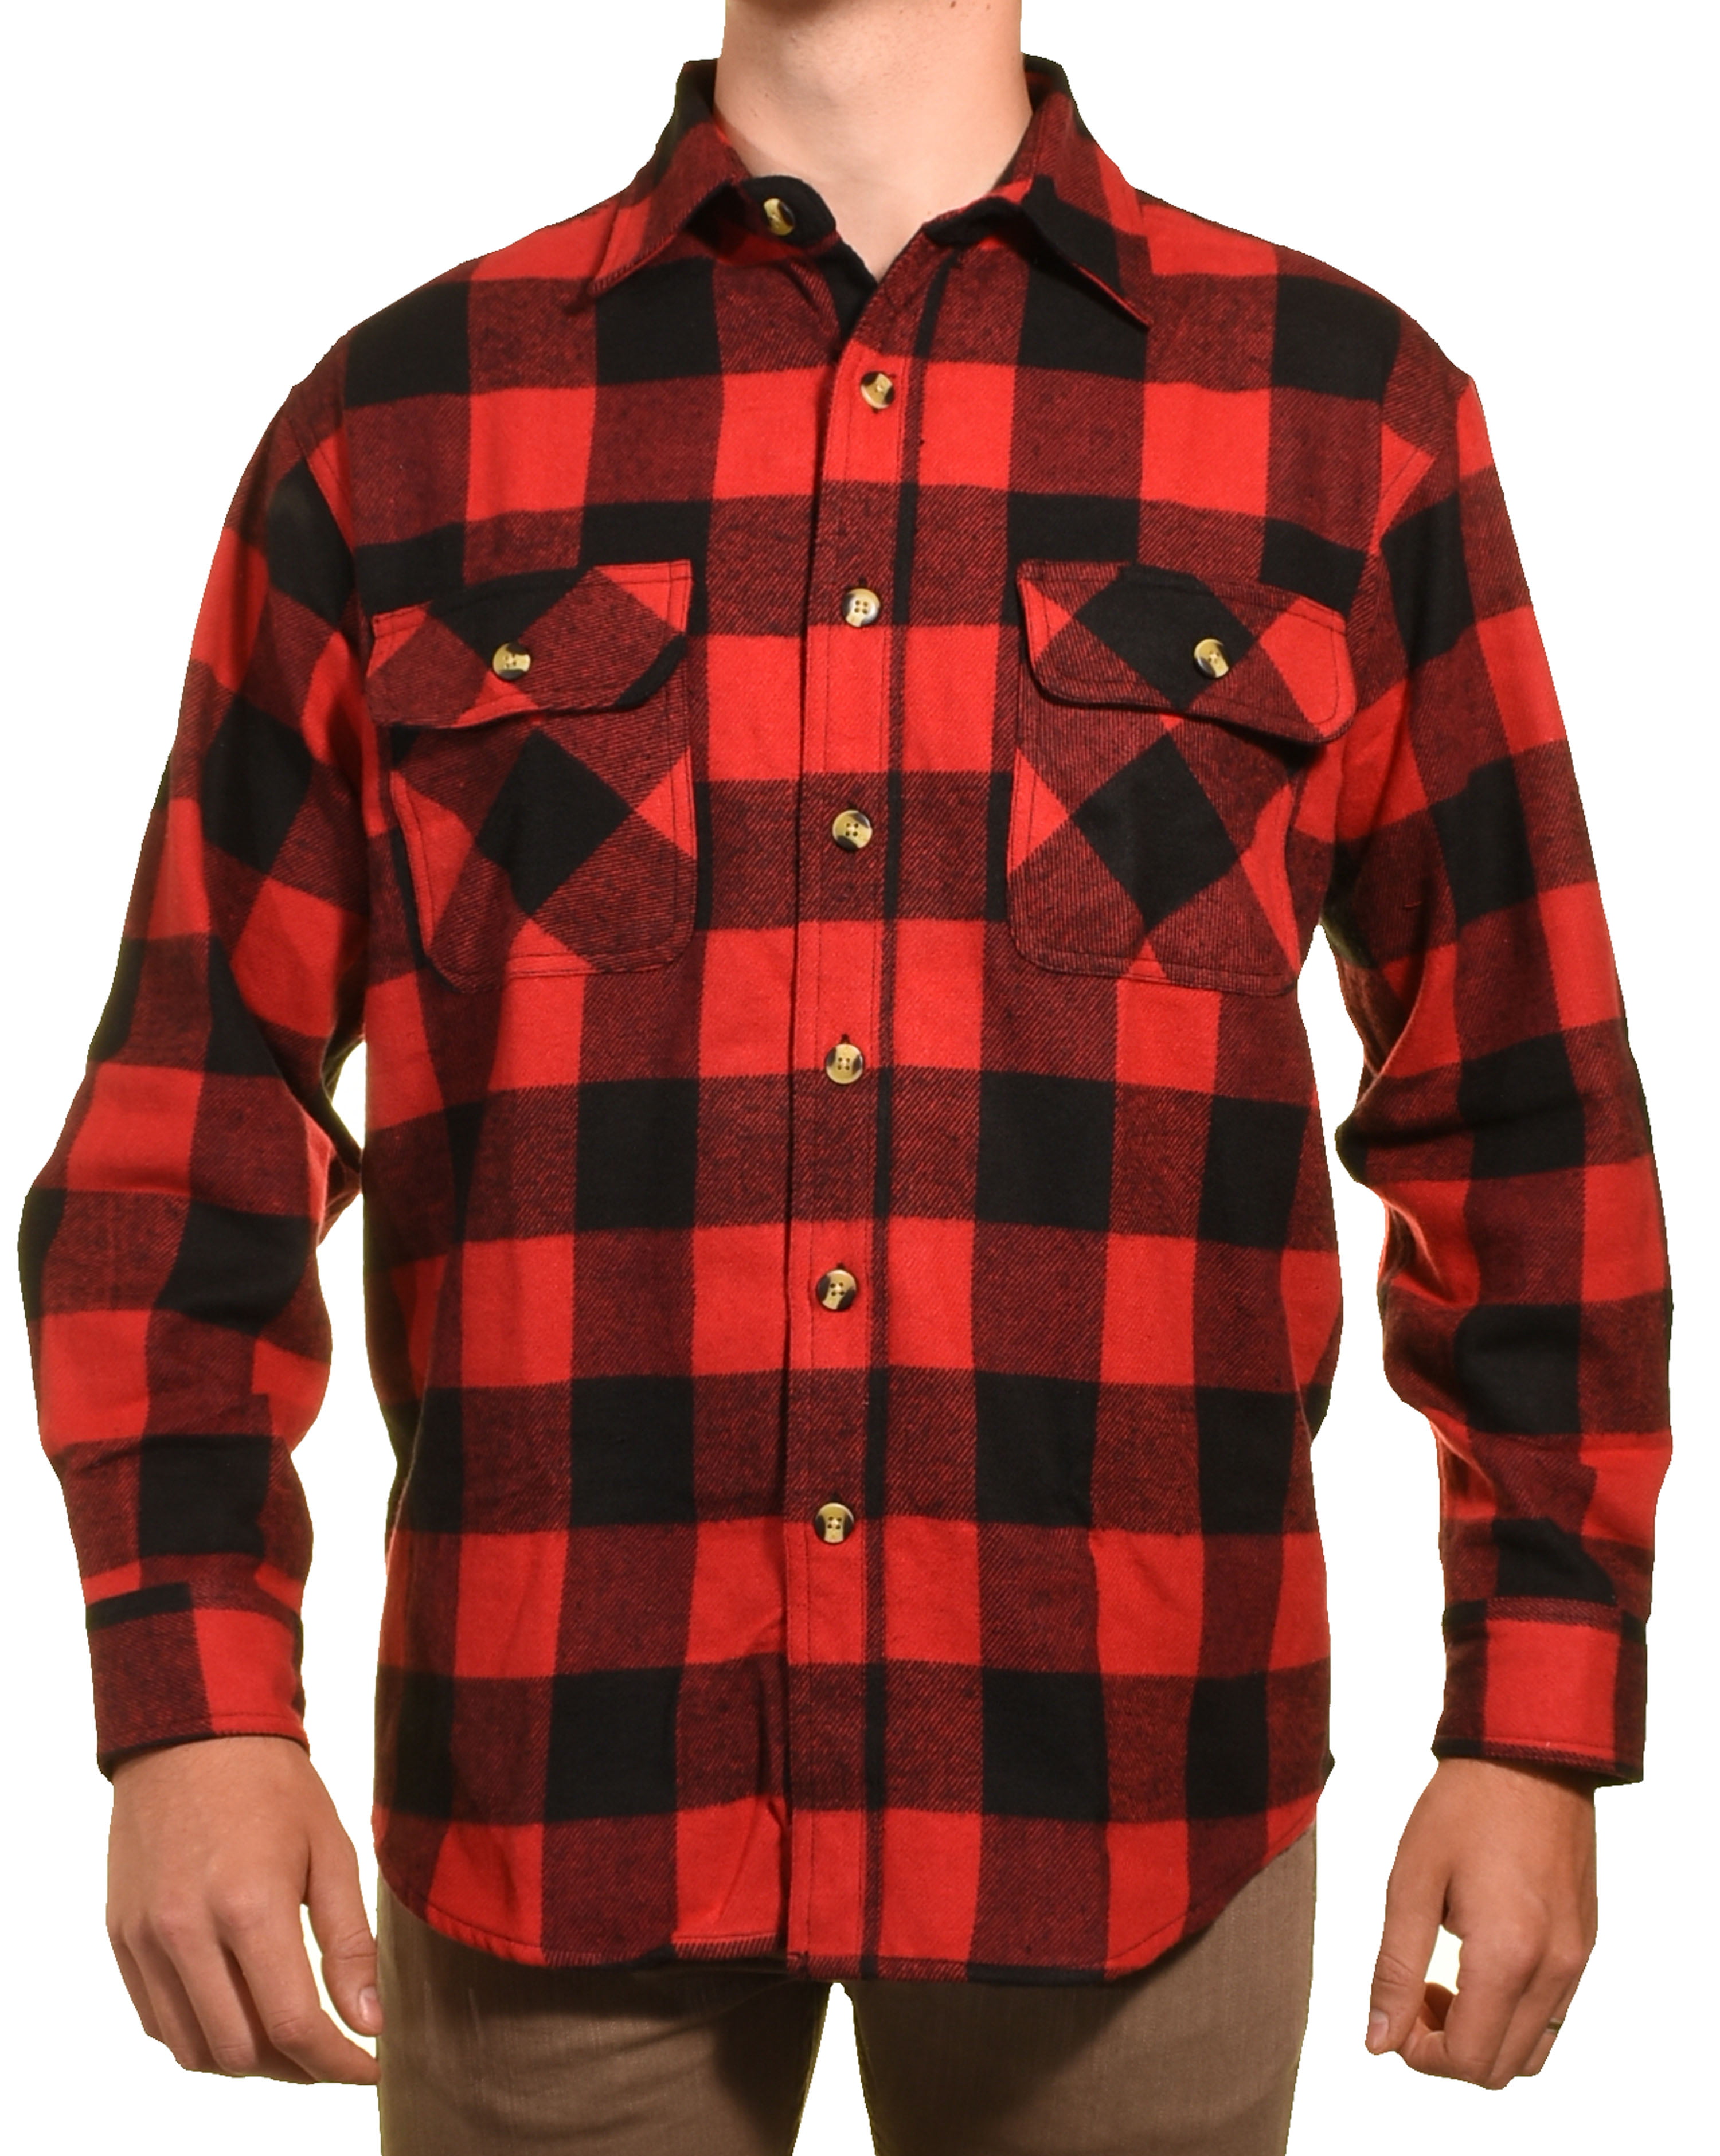 Mens Heavy Duty Flannel Shirt (Red Plaid, X-Large) - Walmart.com